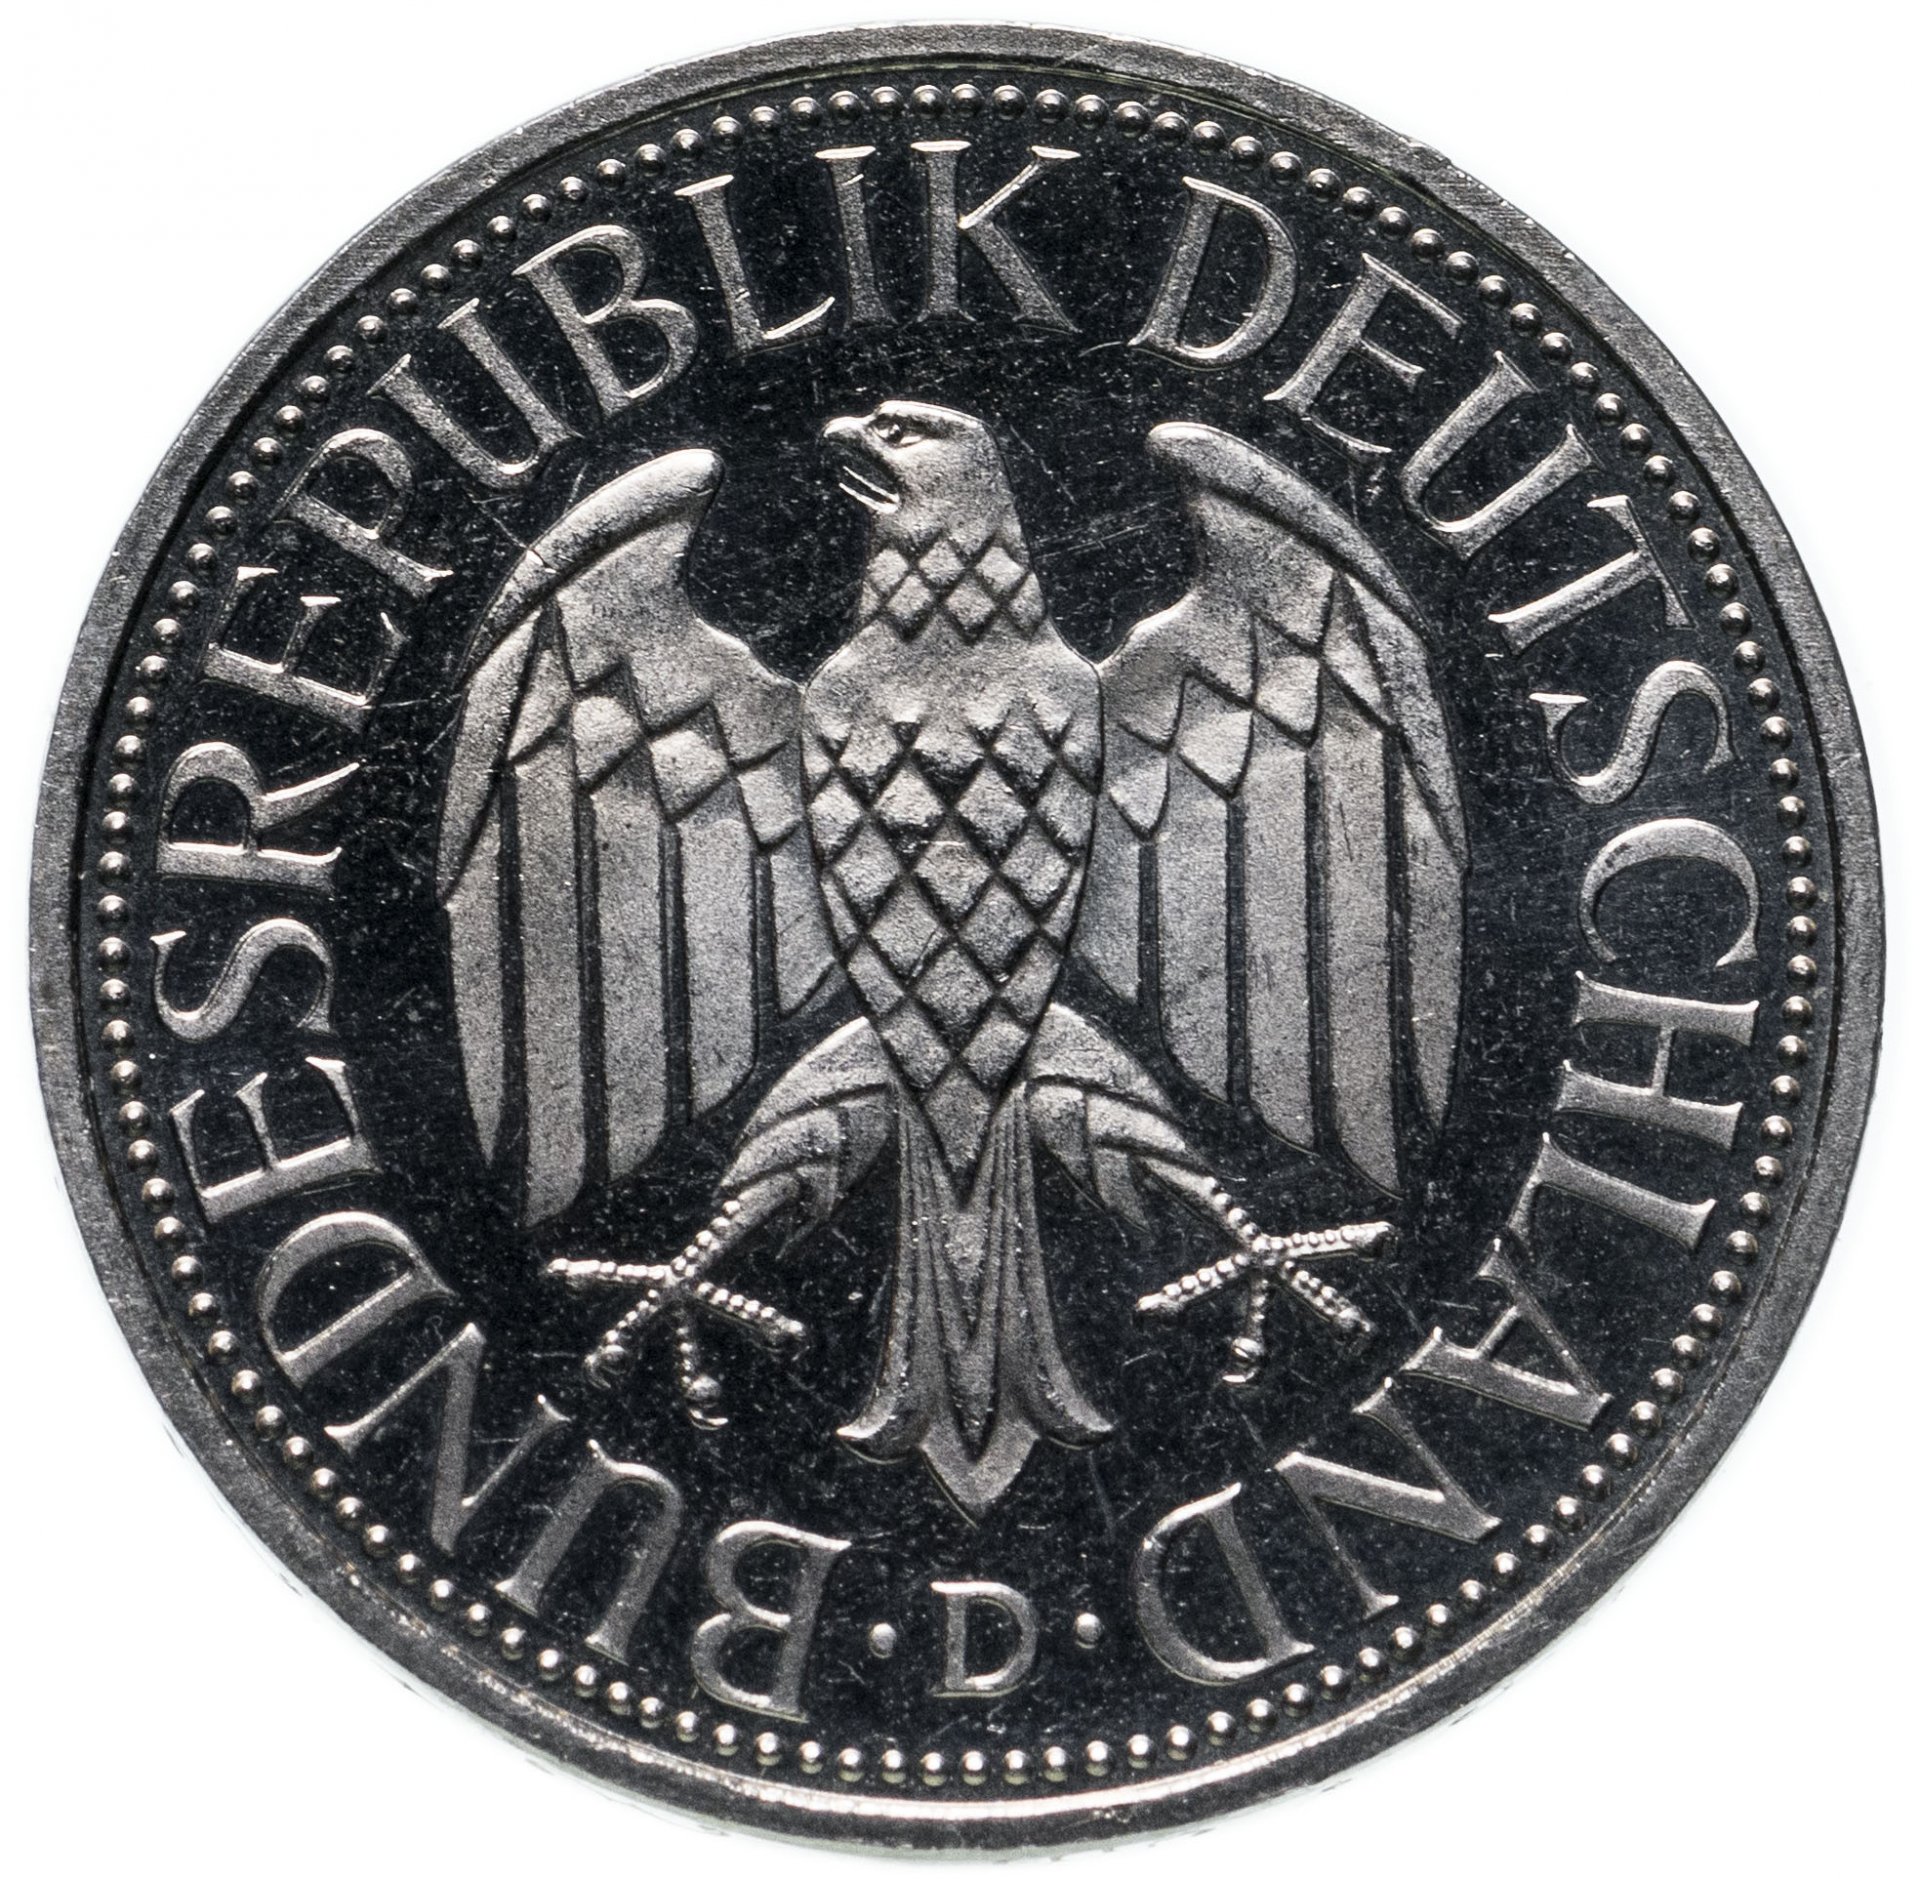 Deutsche mark. Немецкая марка. Немецкие марки монеты. 1 Немецкая марка.